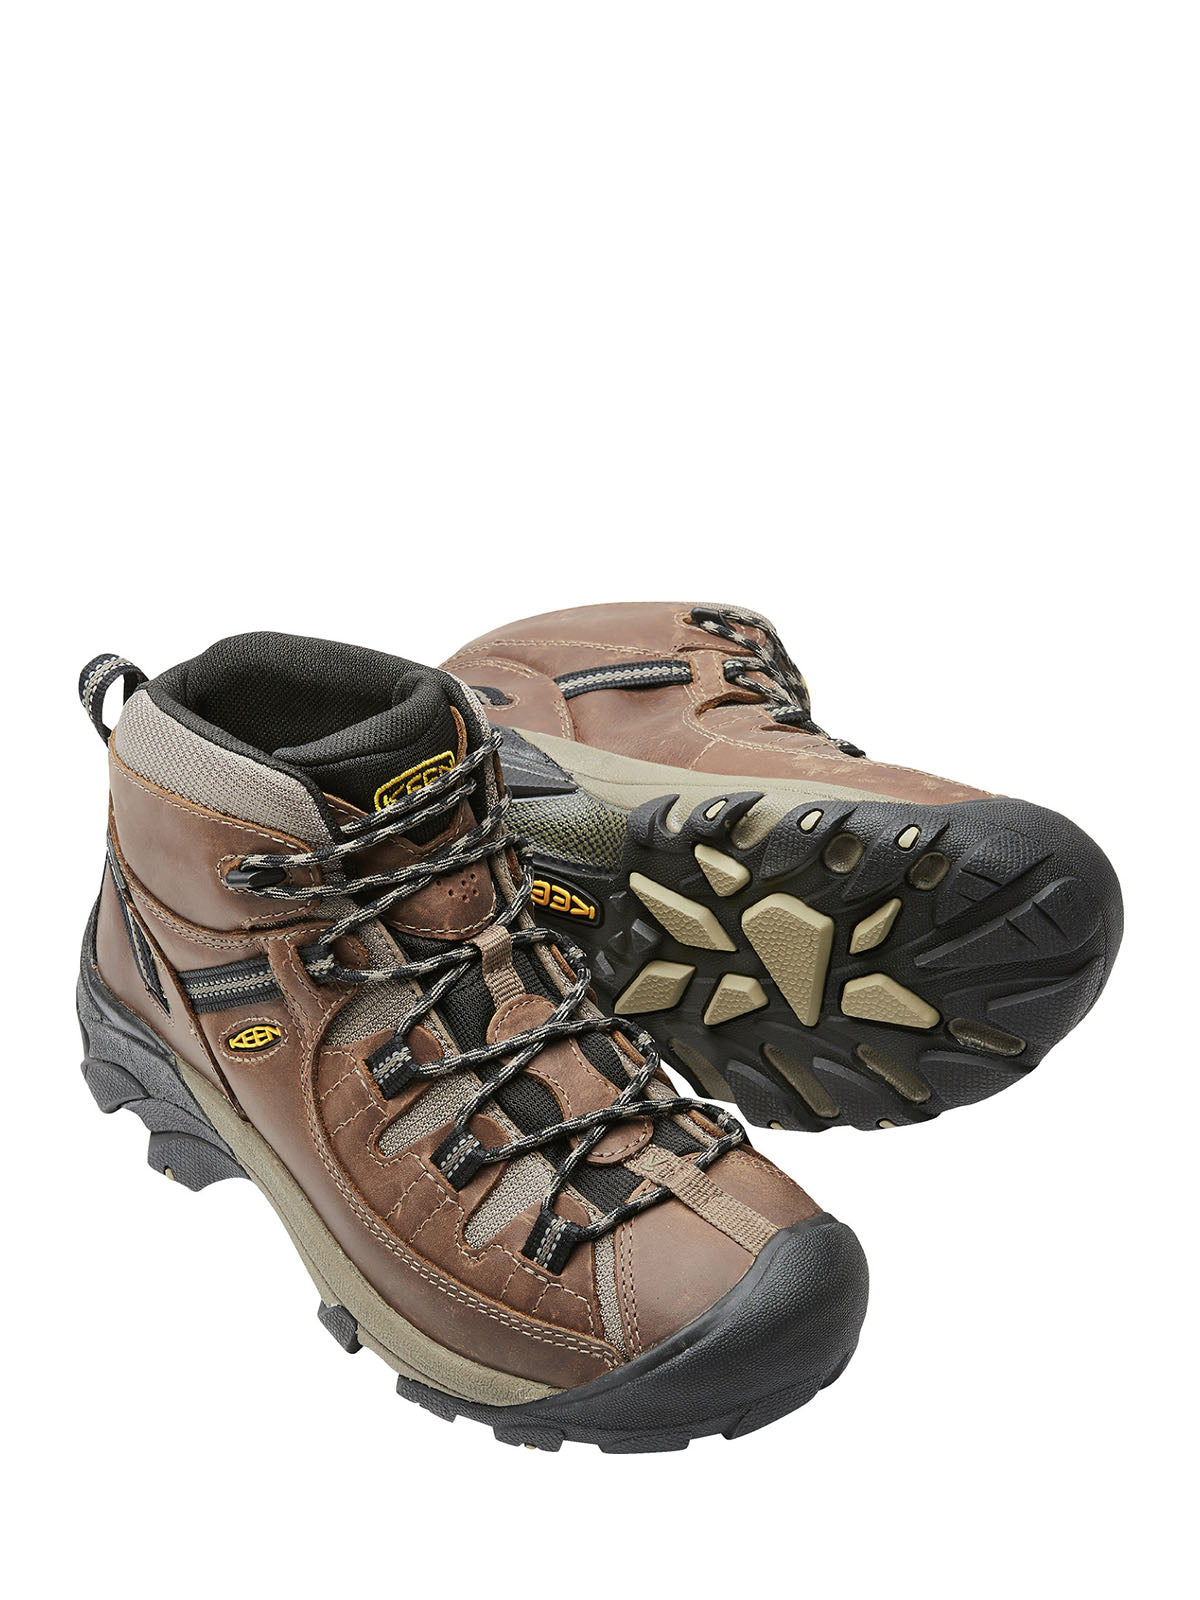 Targhee II Mid Waterproof Hiking Boots for Men